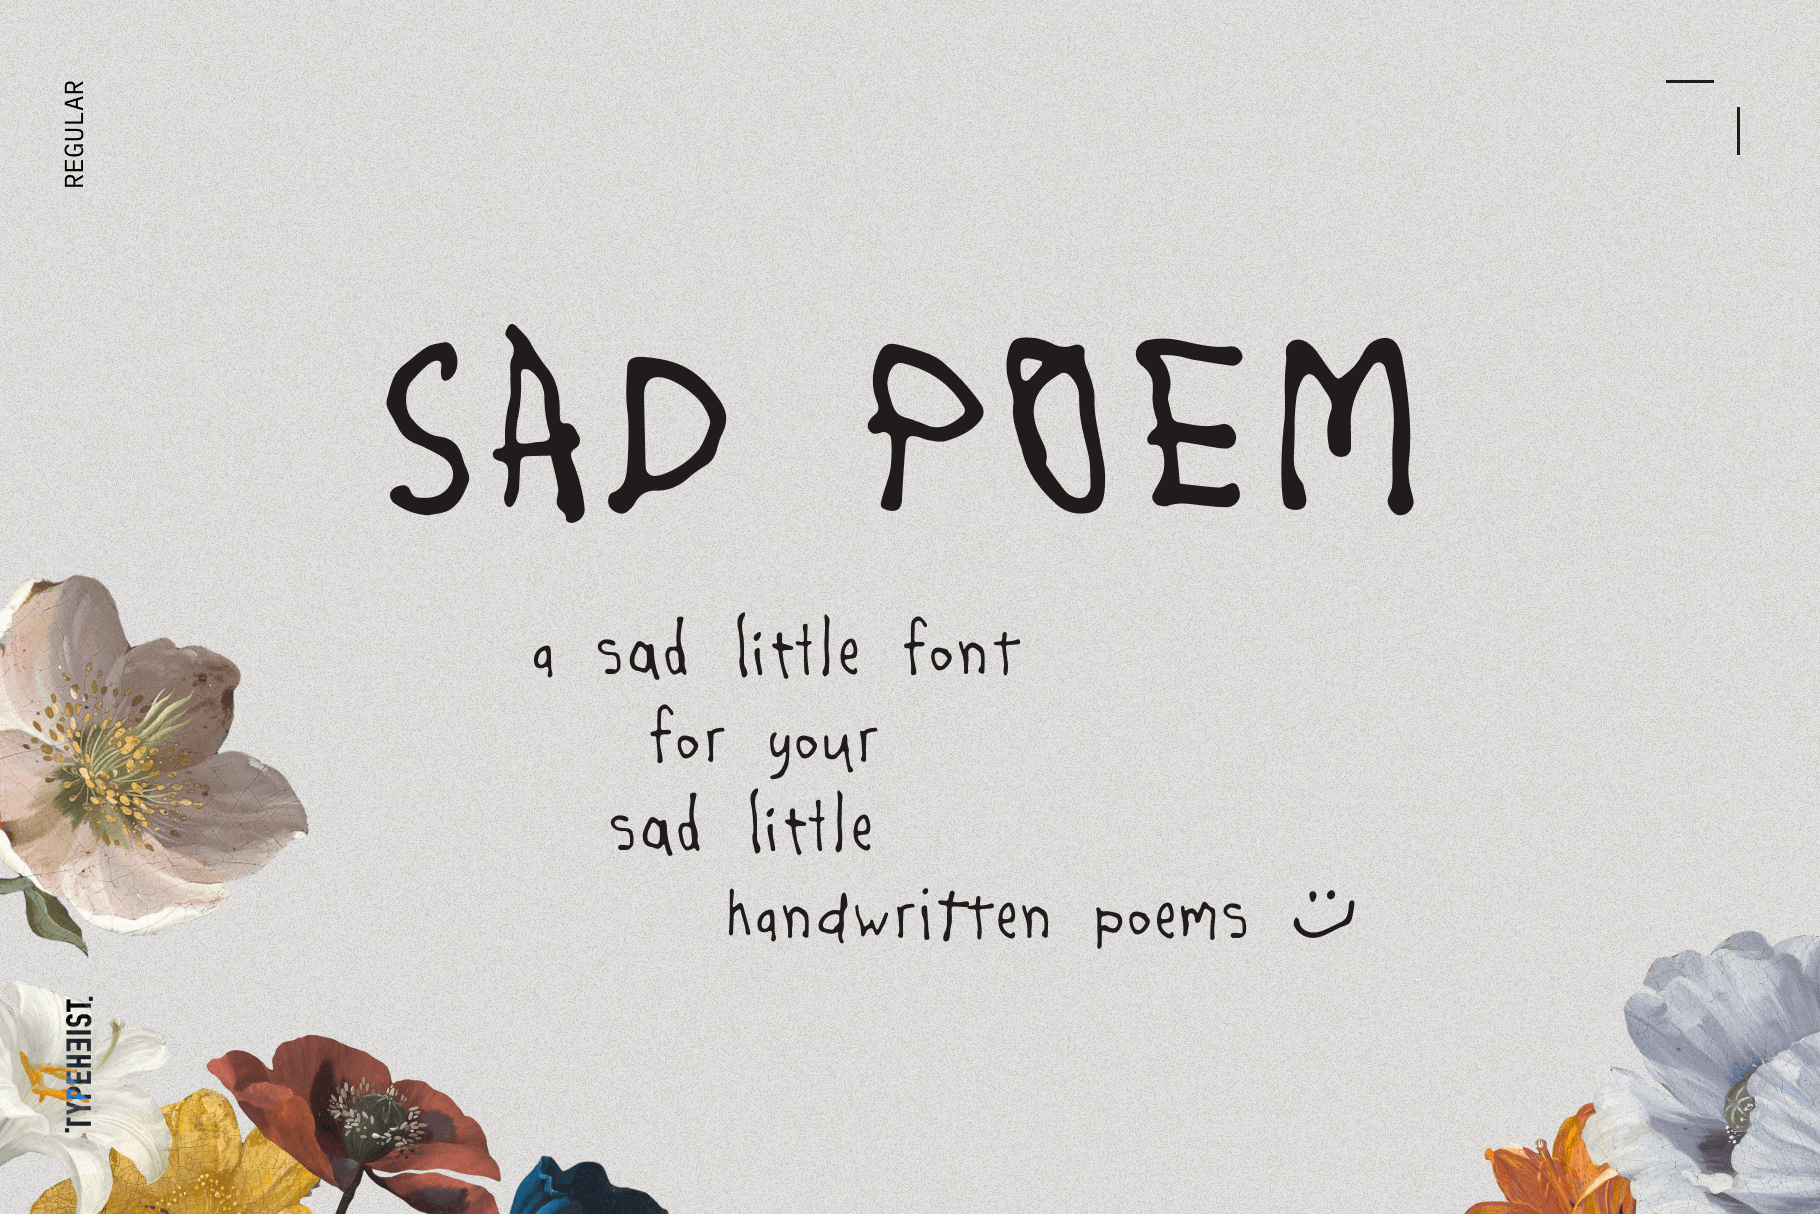 Sad Poem: A sad little font for your sad little handwritten poems.